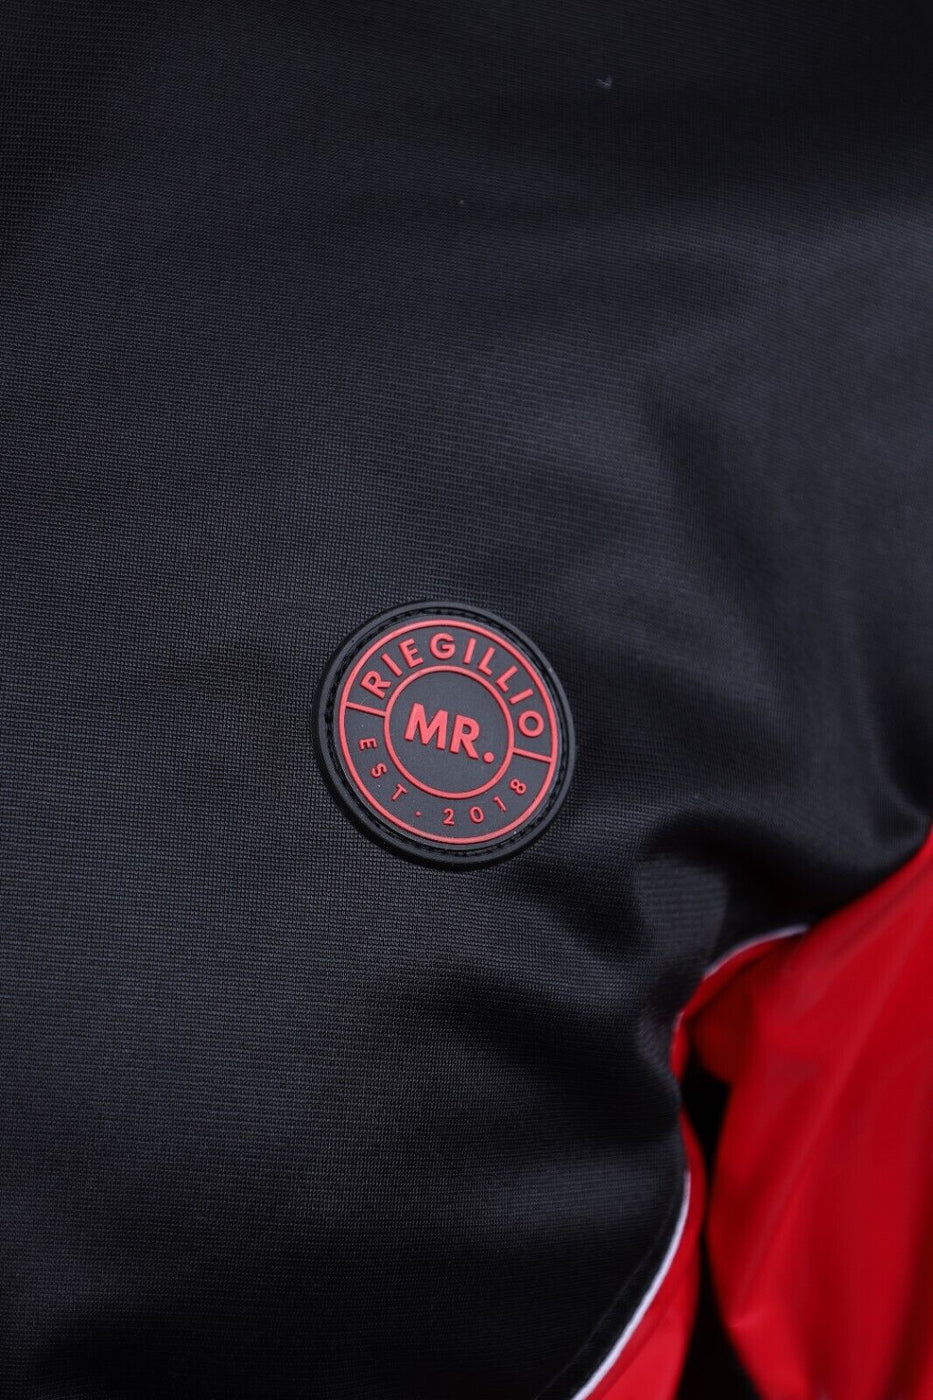 MR. RIEGILLIO PVC Jacket 24 Tracksuit Shiny Red R1015 ...